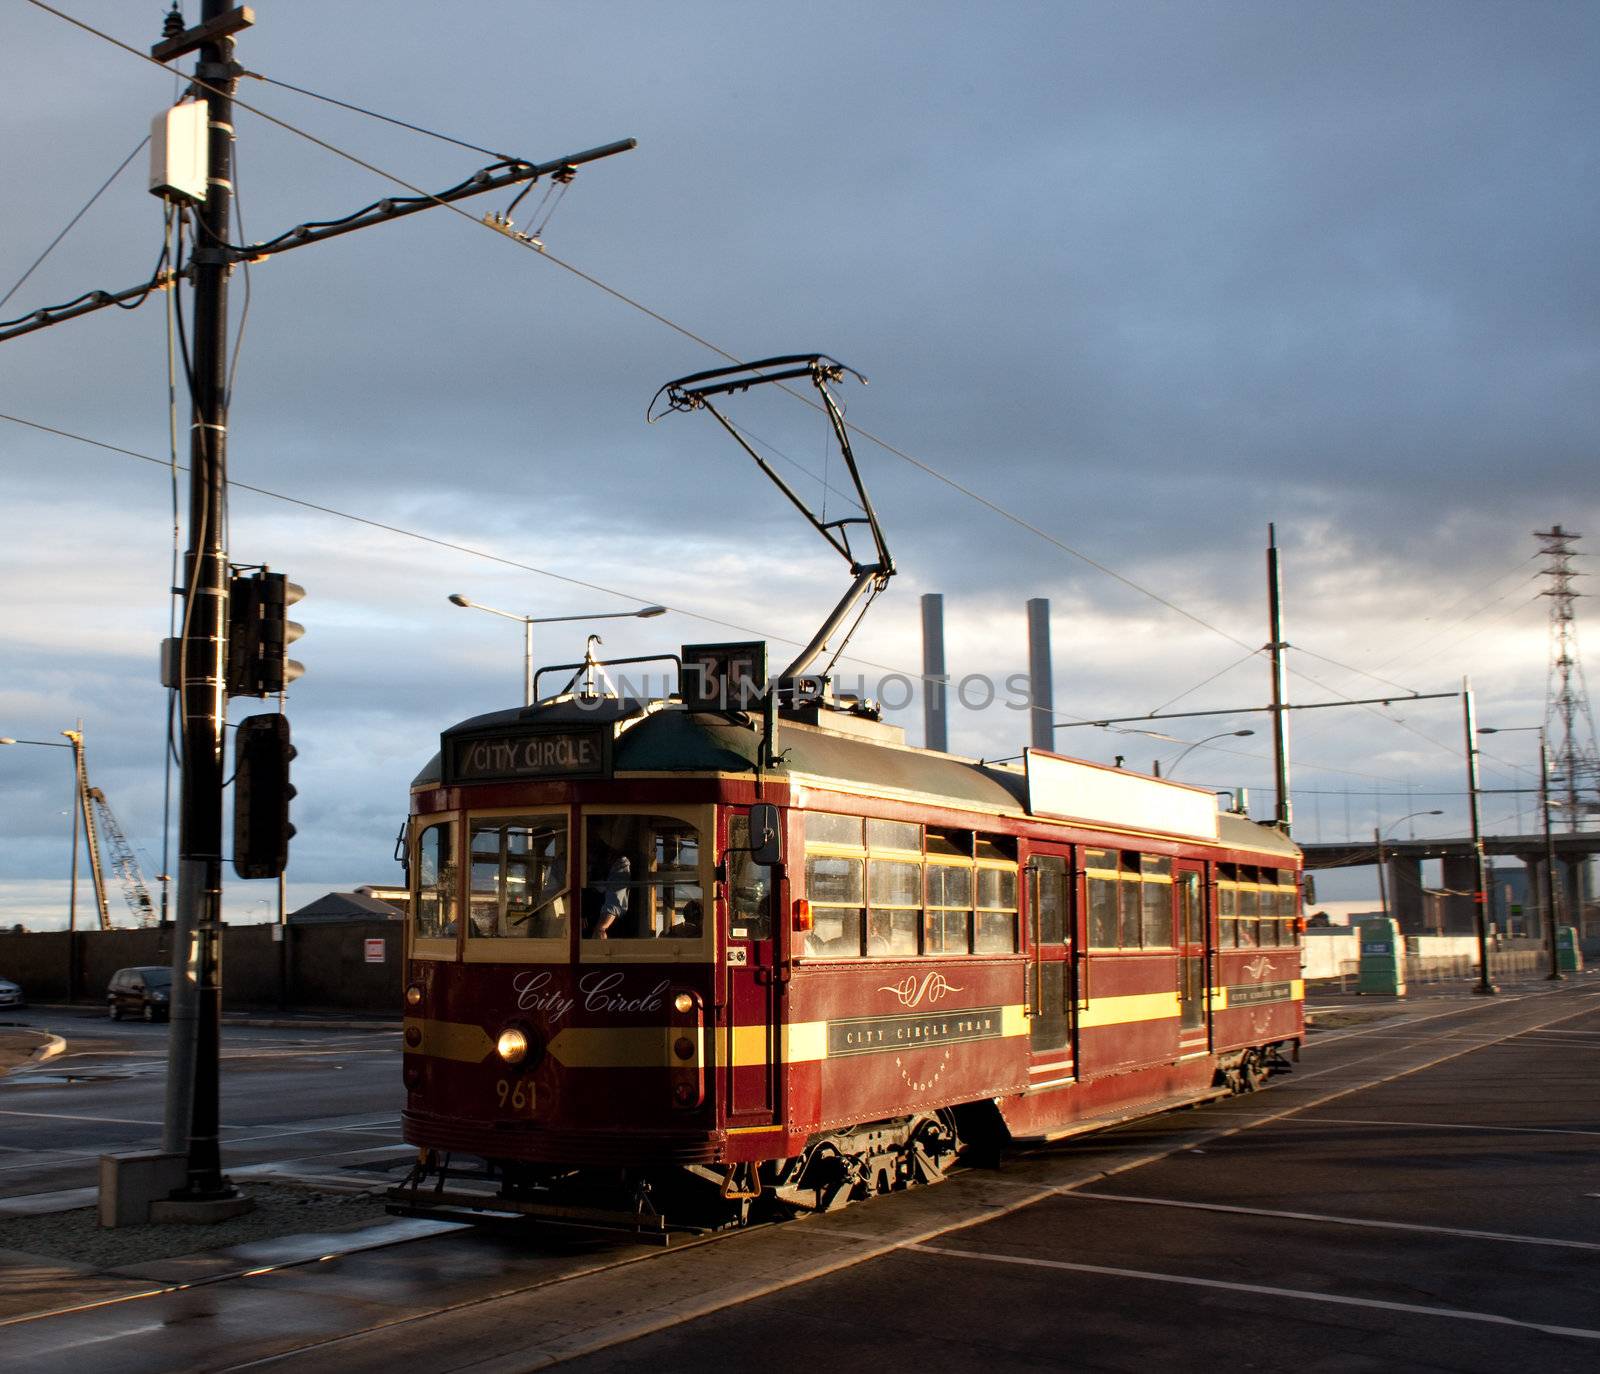 Melbourne's City Circle Tram by edan